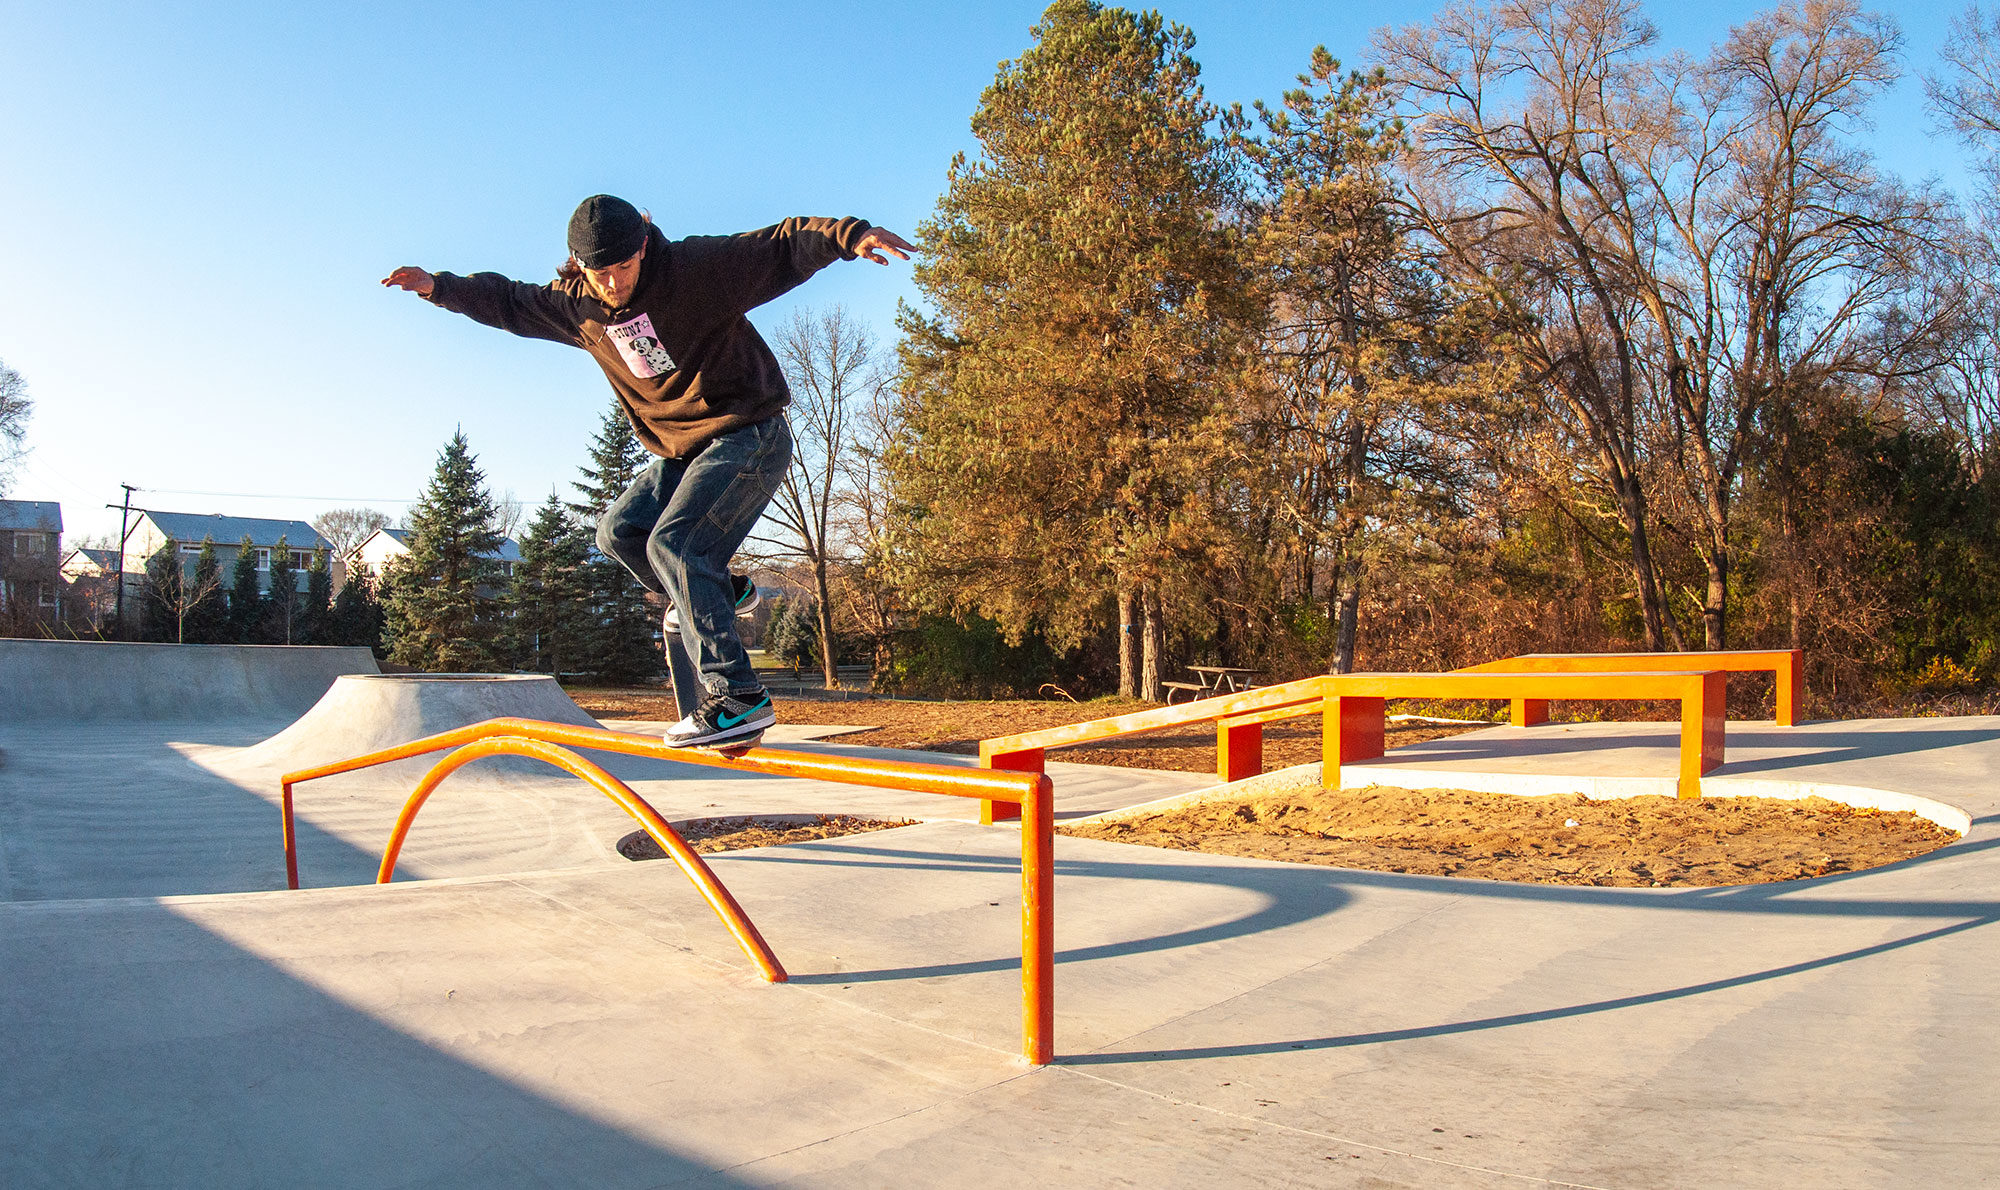 Backside overcooks at Milford Michigan Skatepark Designed and Built by Spohn Ranch